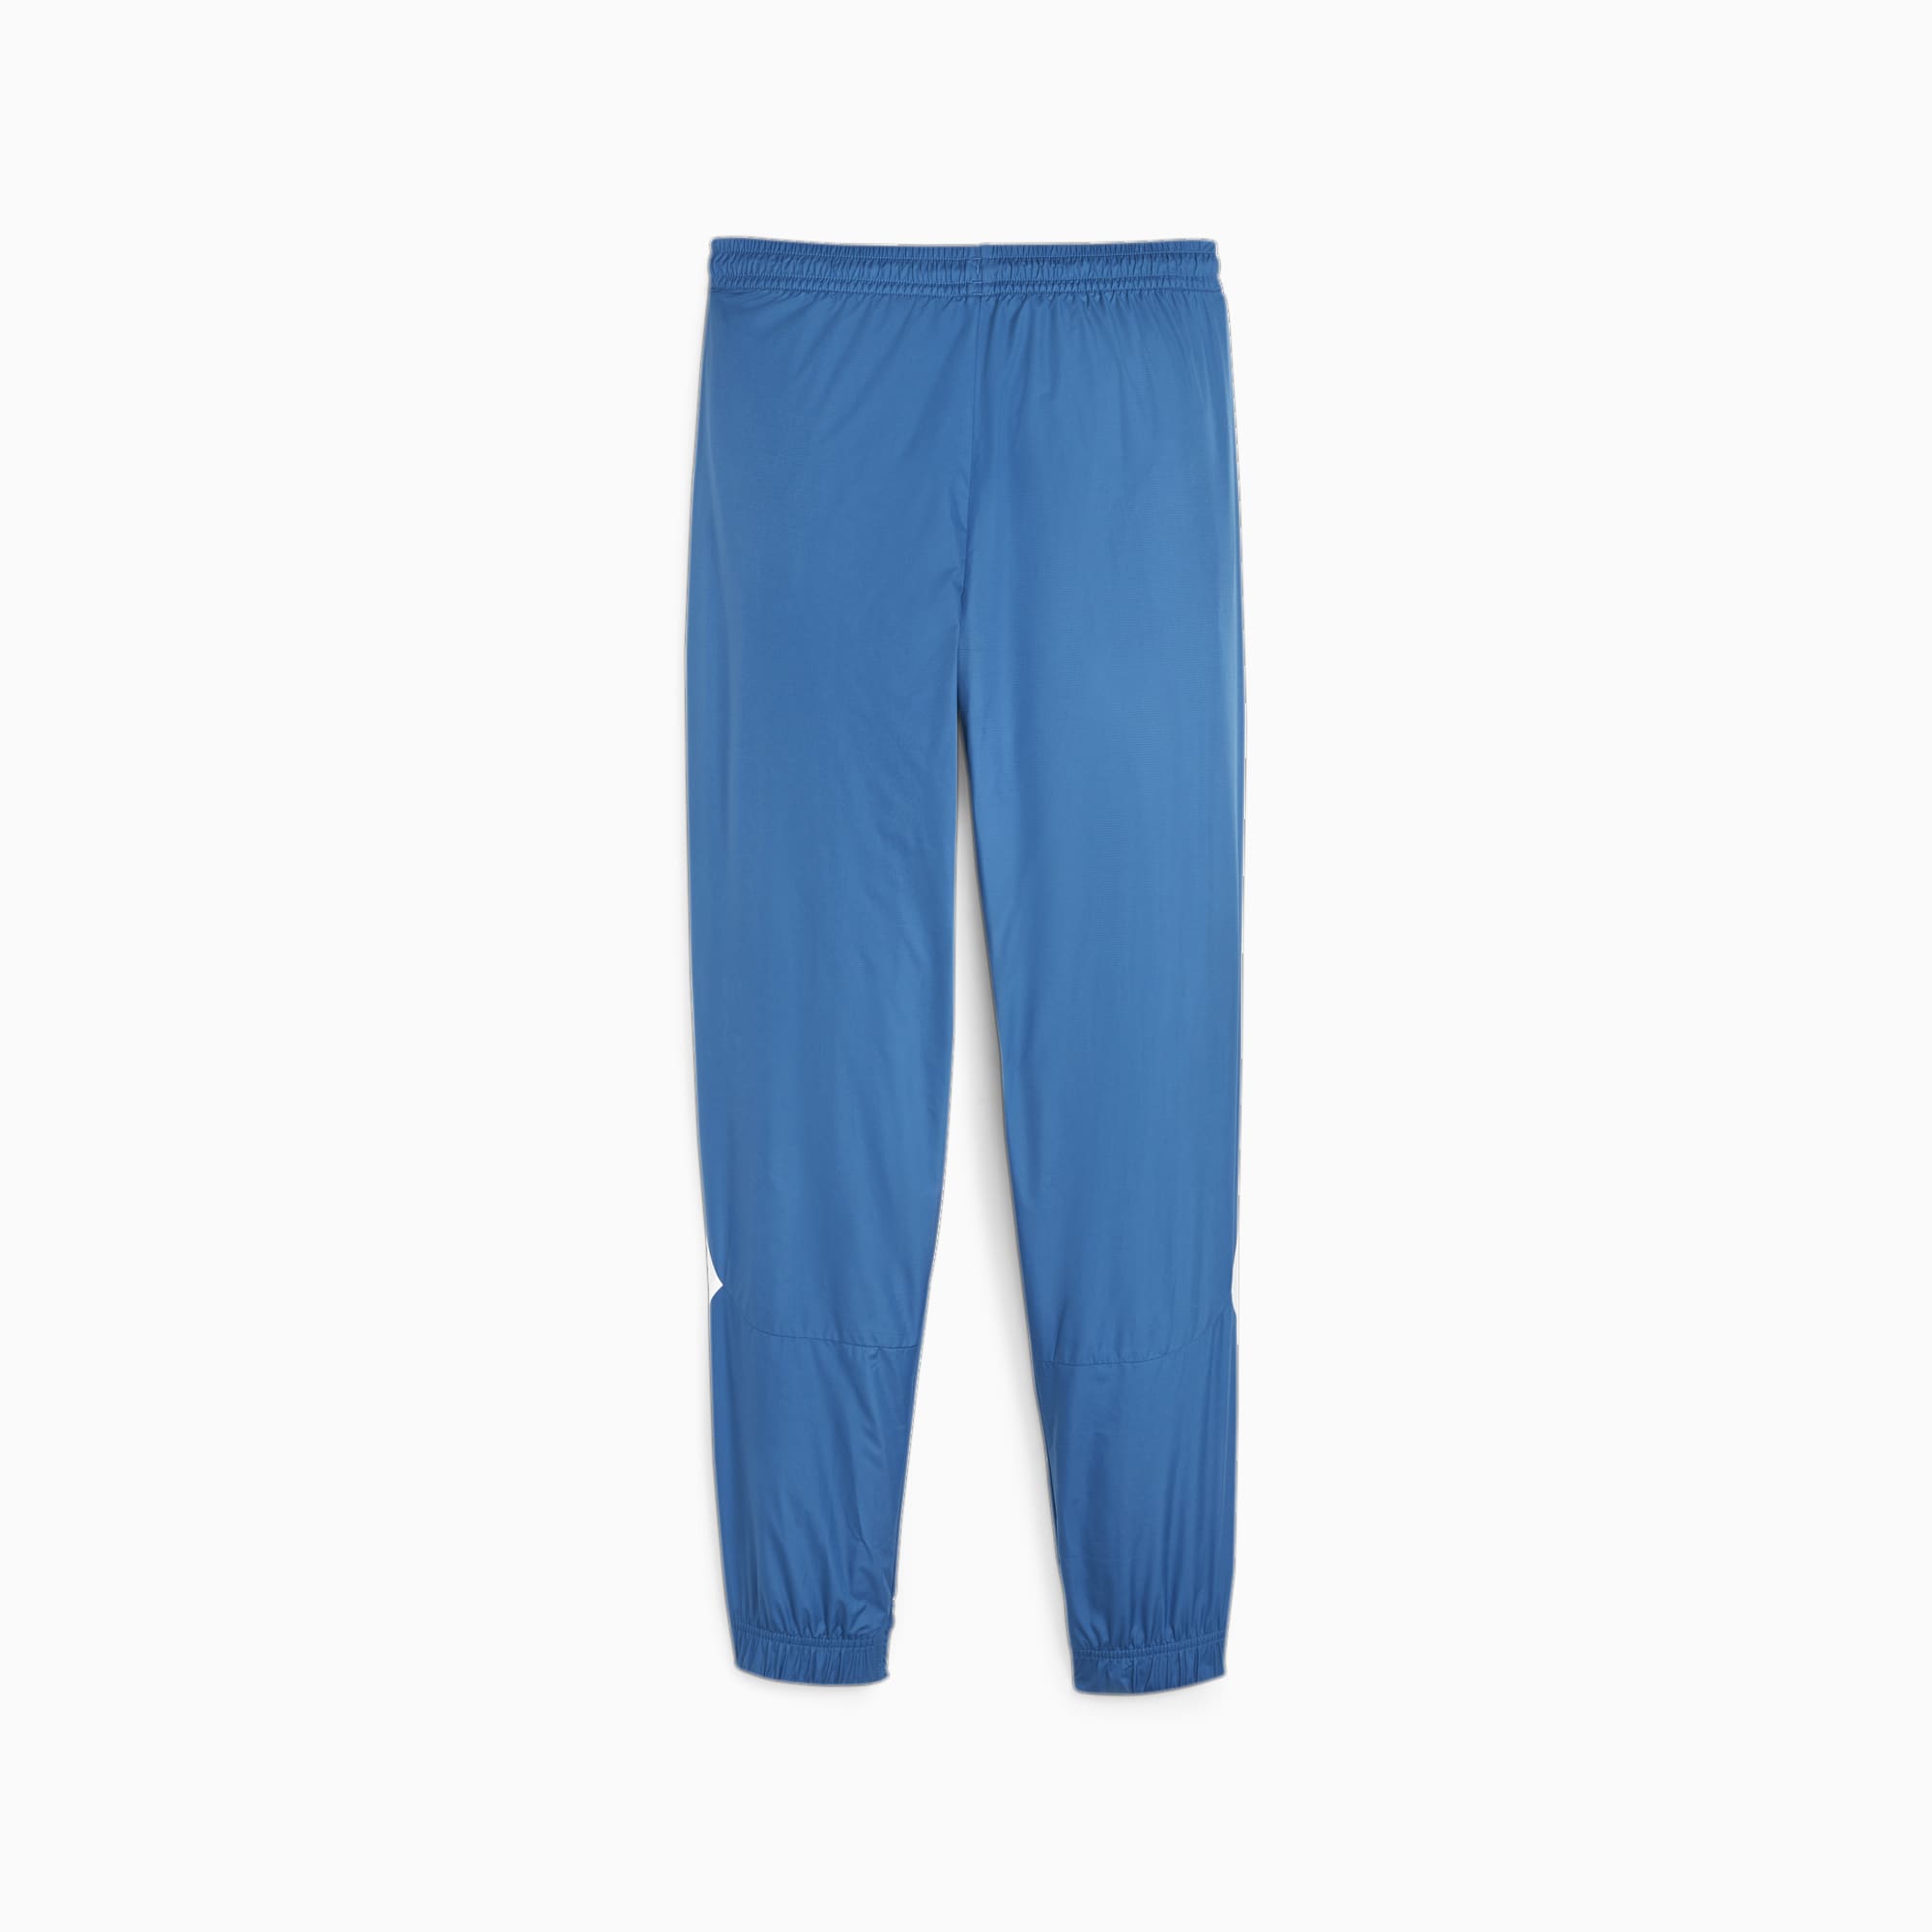 PUMA Manchester City F.C. Prematch Woven Pants Men, Lake Blue/White, Size XL, Clothing